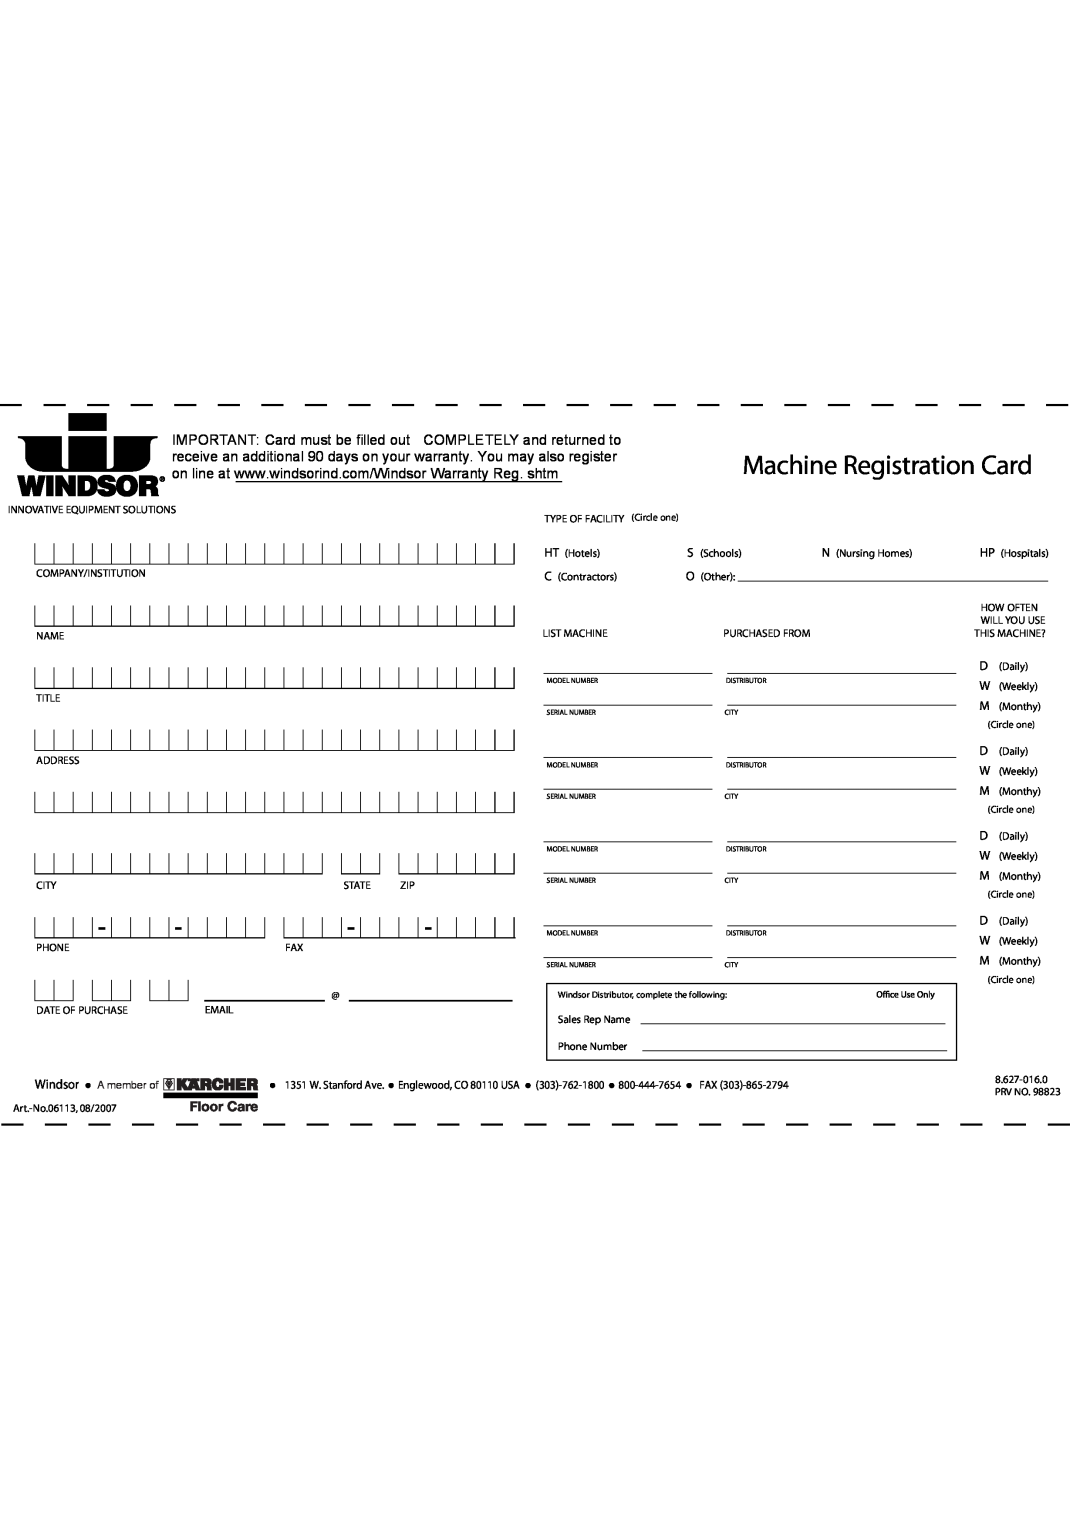 Windsor 10120260, SRXP12IA manual Machine Registration Card, Windsor, A member of 